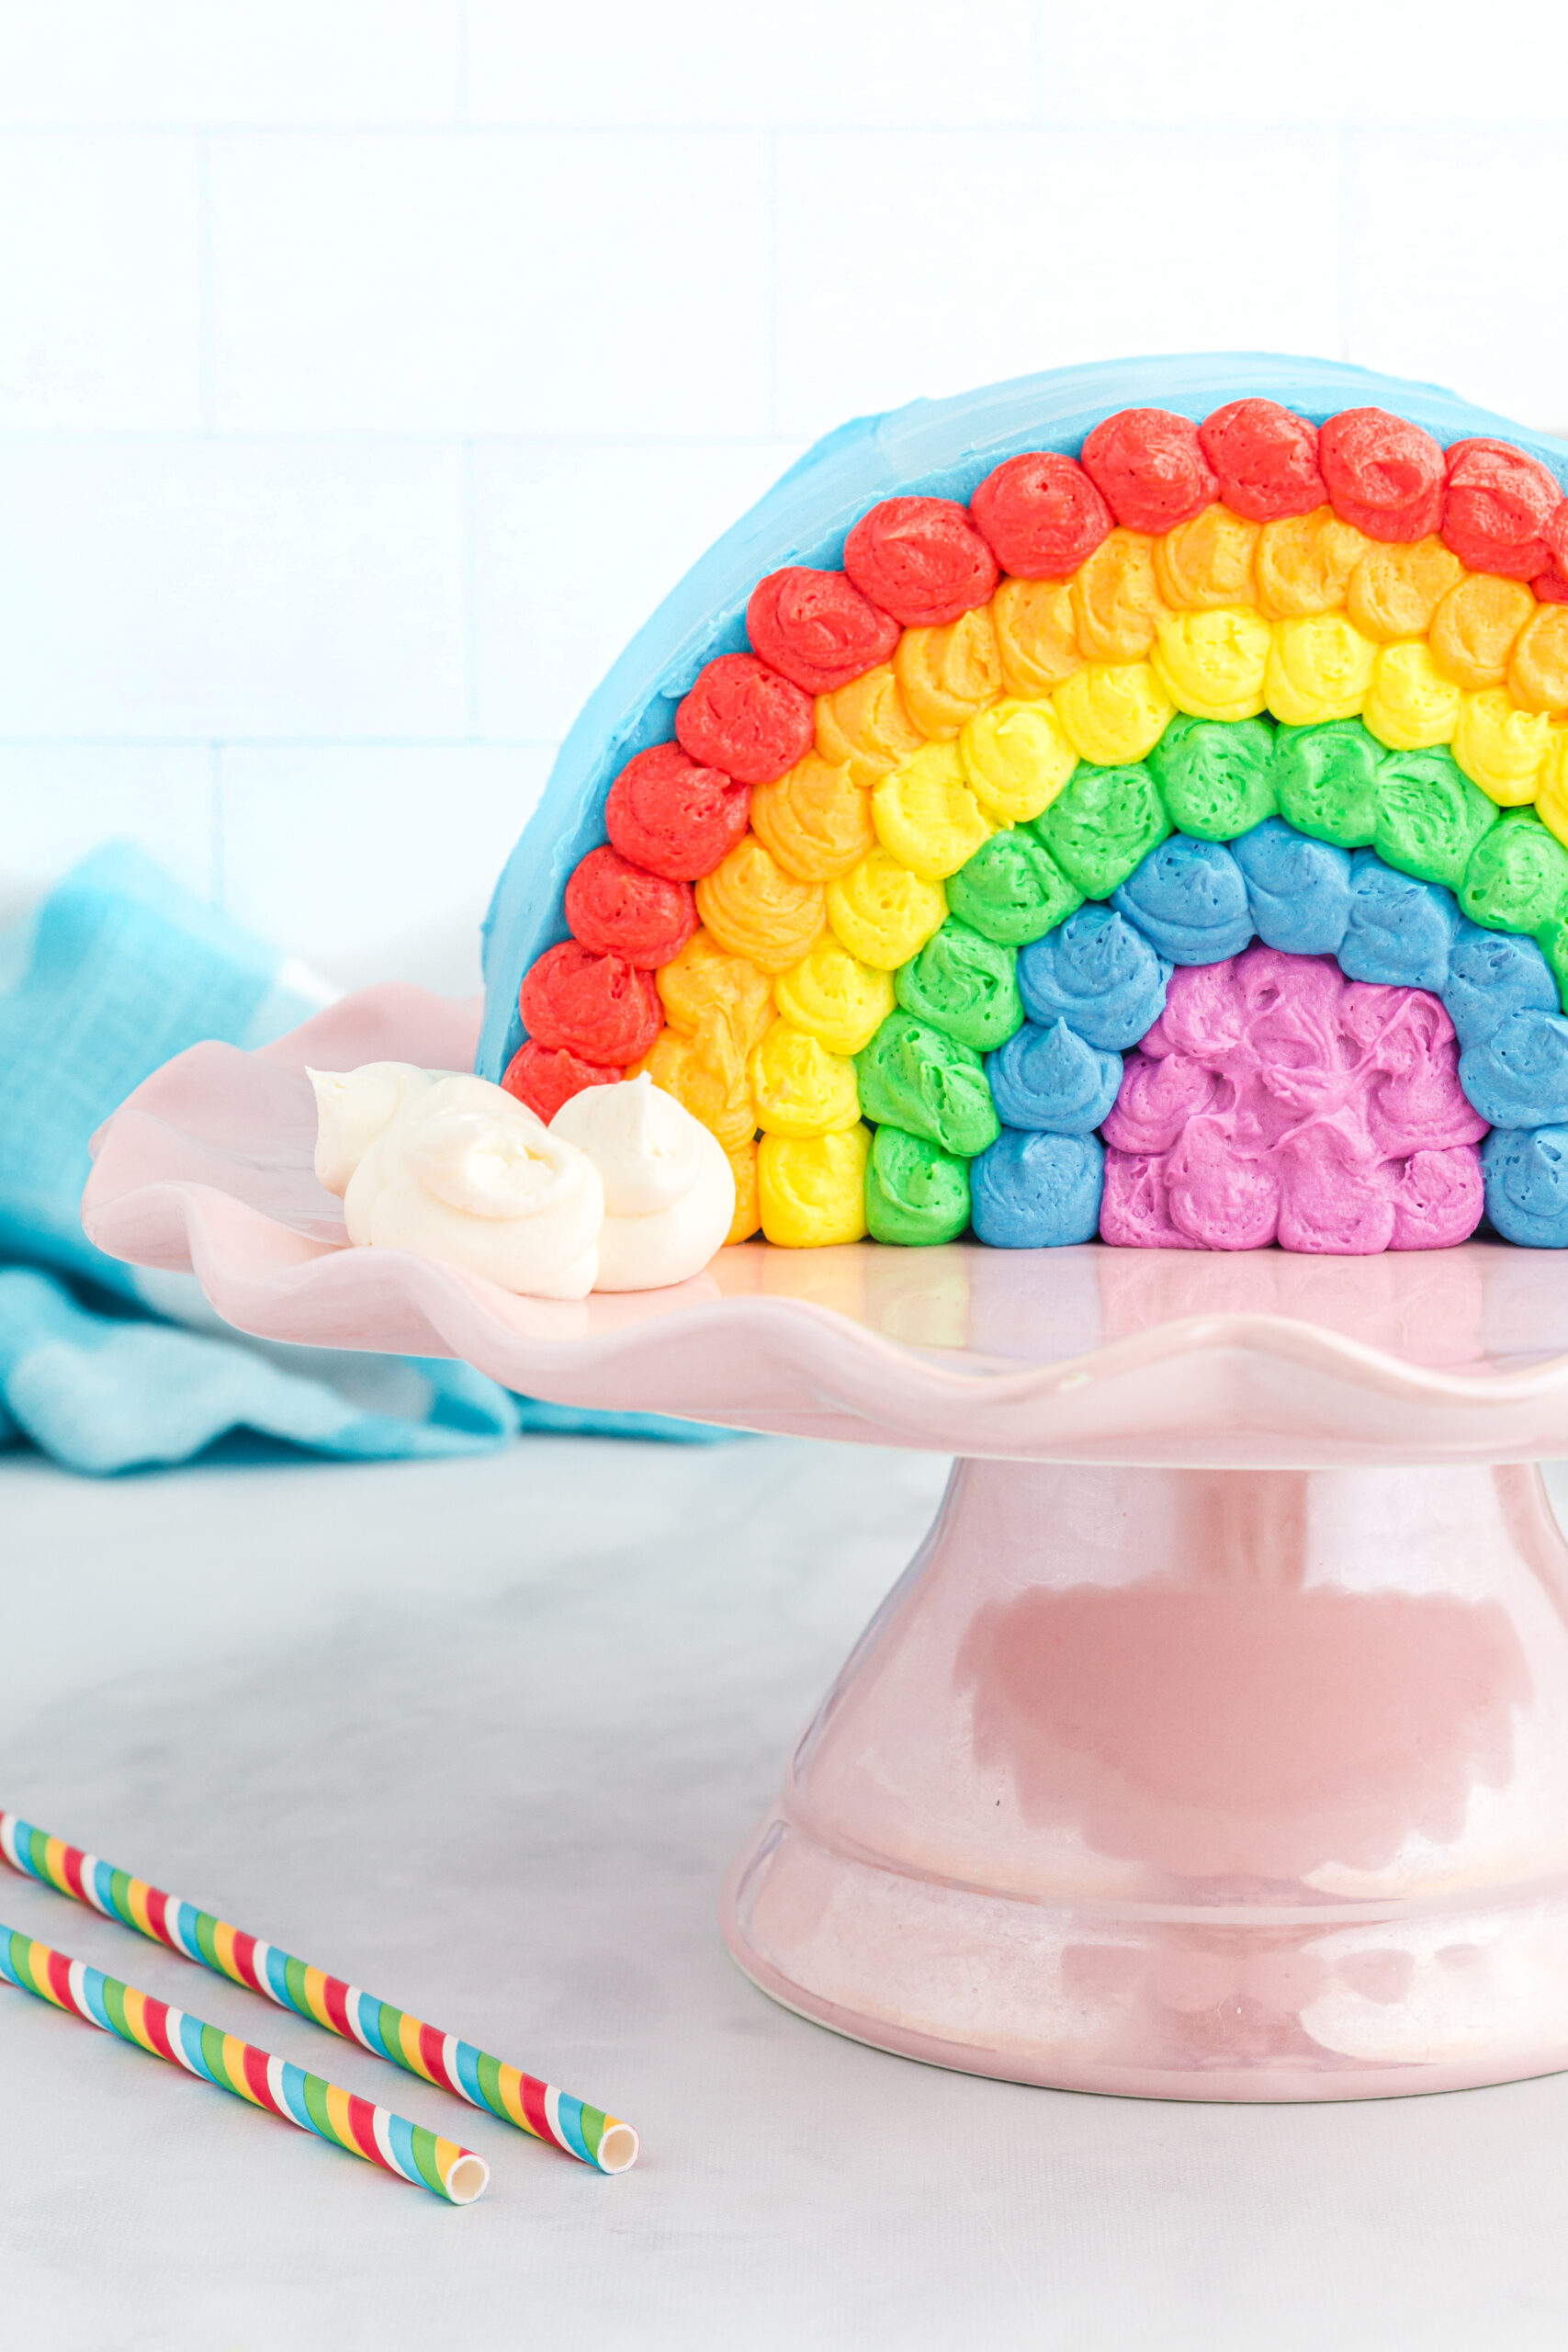 pretty rainbow cake served on a shiny pink cake stand.